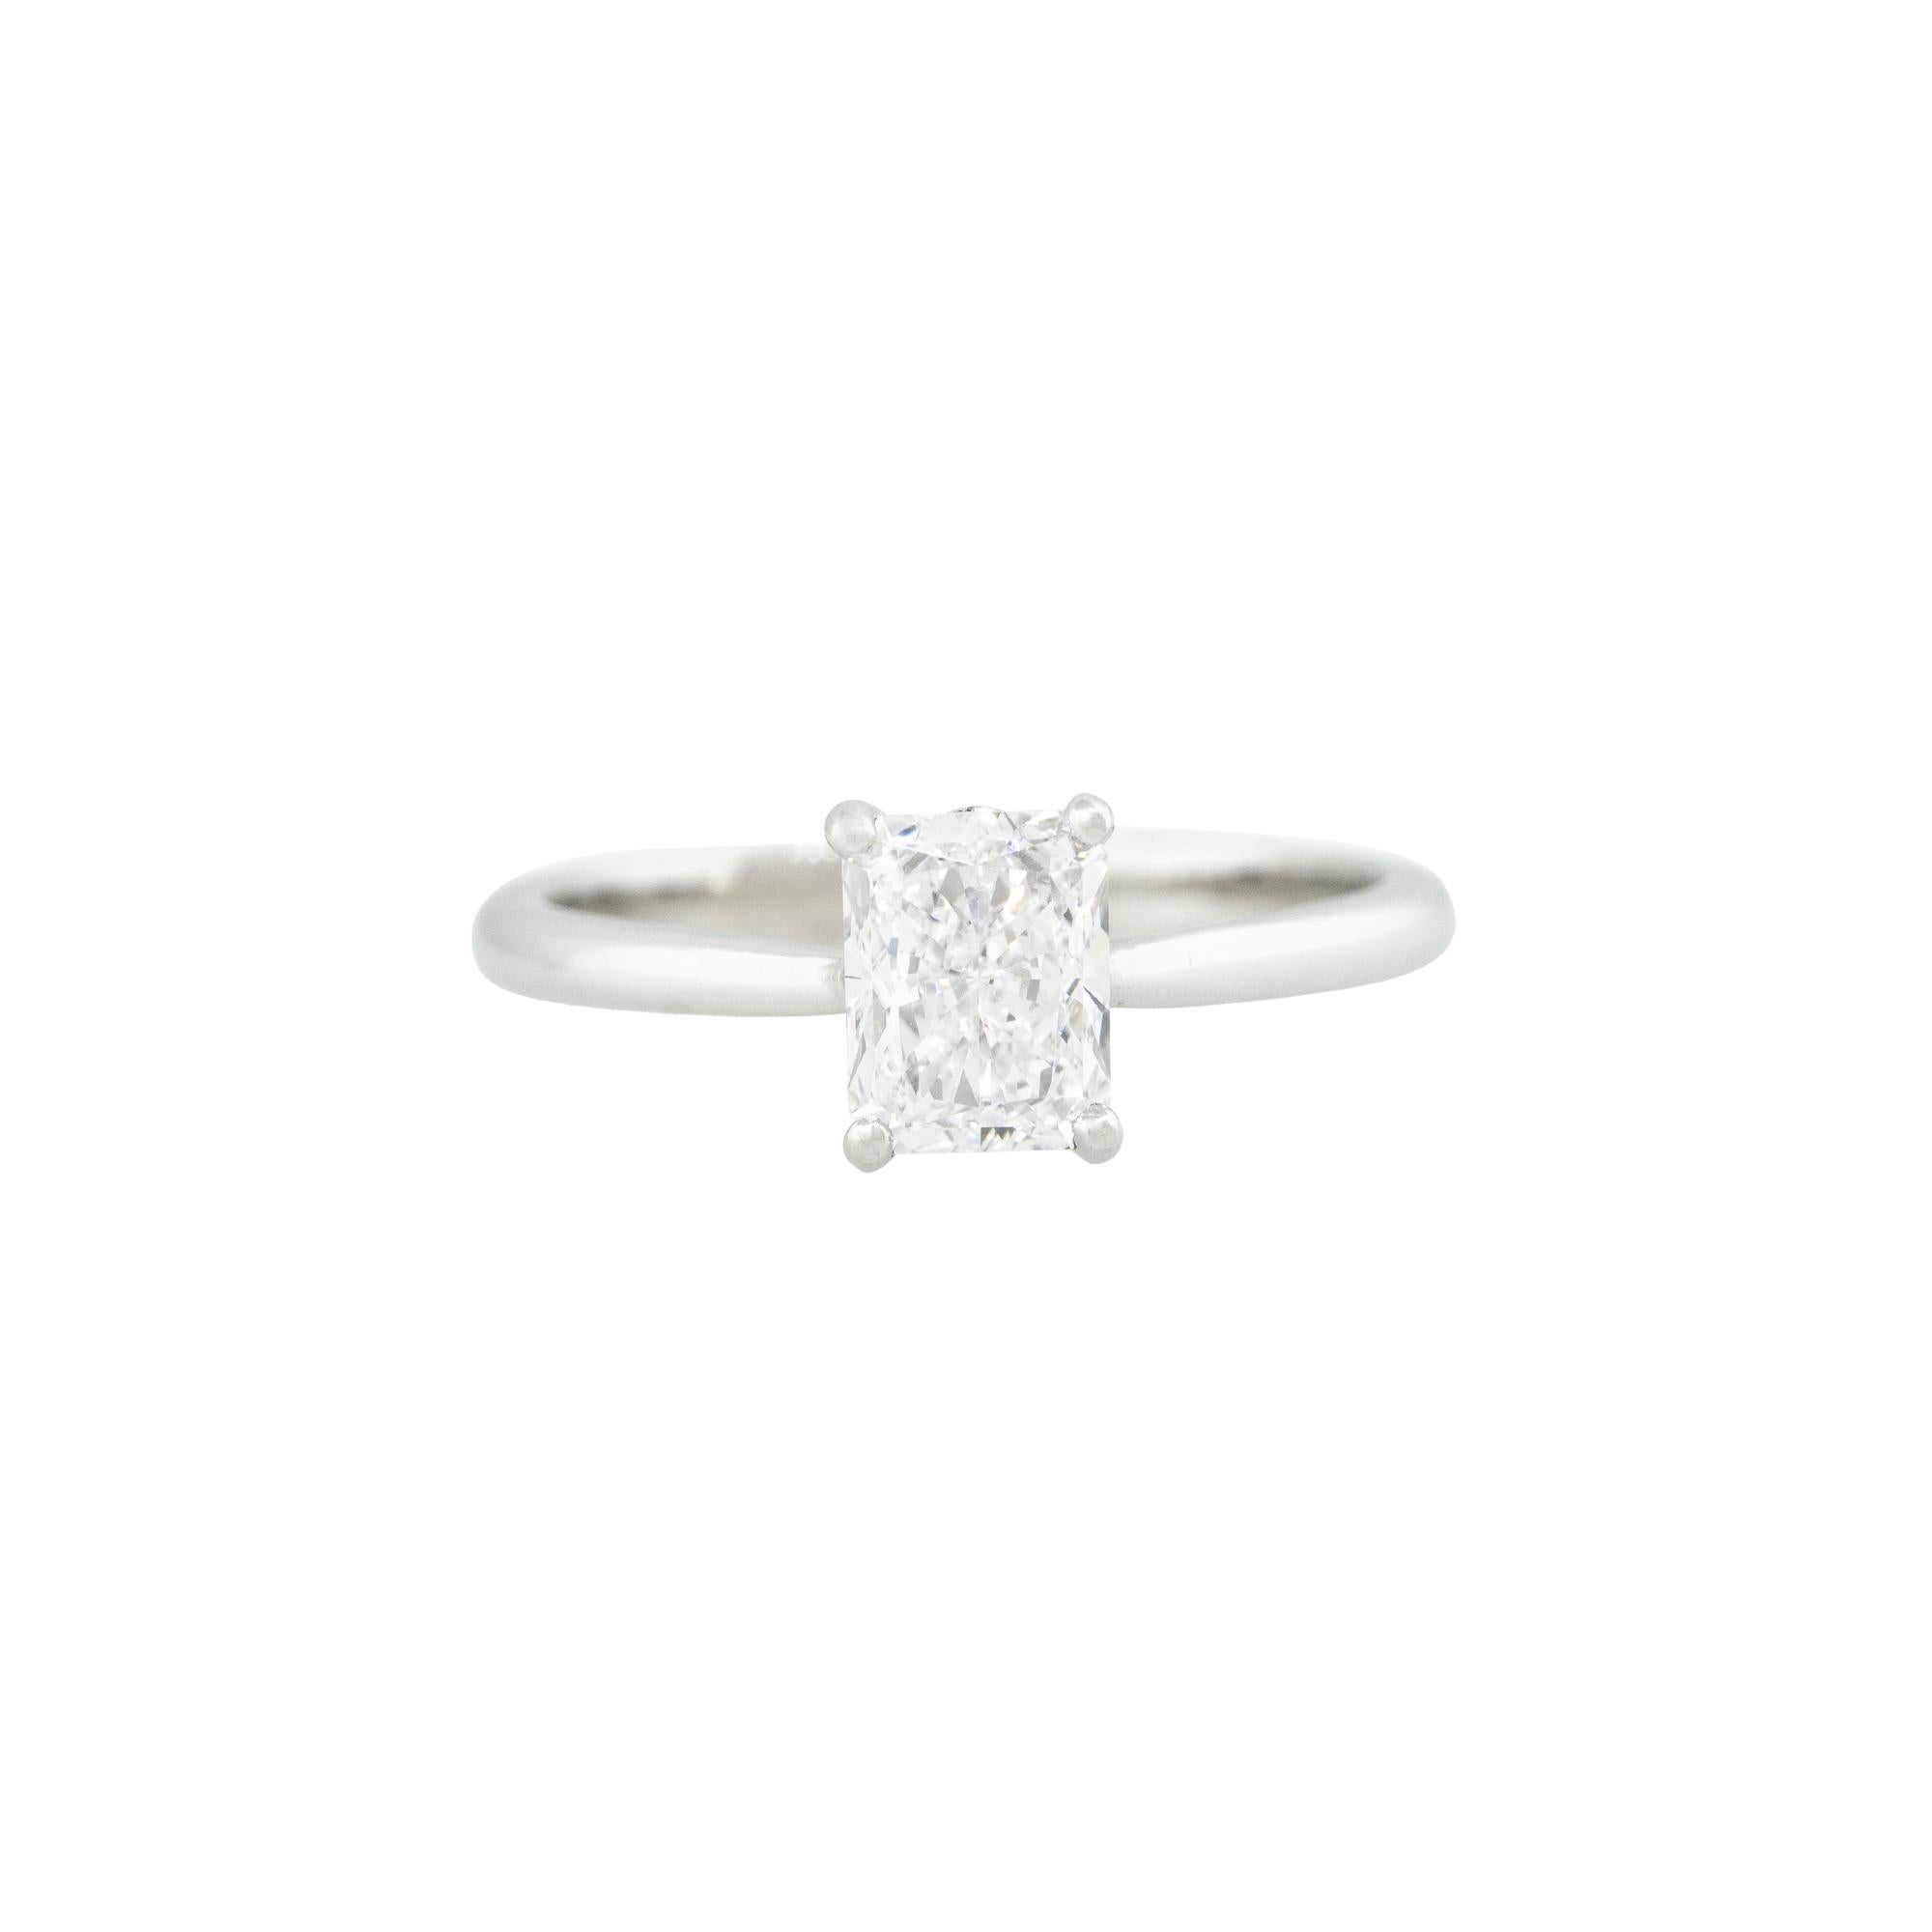 GIA Certified Platinum 1.20ctw Radiant Cut Diamond Engagement Ring
Style: Radiant Cut Diamond Engagement Ring
Material: Platinum
Main Diamond Details: The main diamond is a 1.20 carat Radiant cut stone. Main diamond is GIA certified: 6342395734.